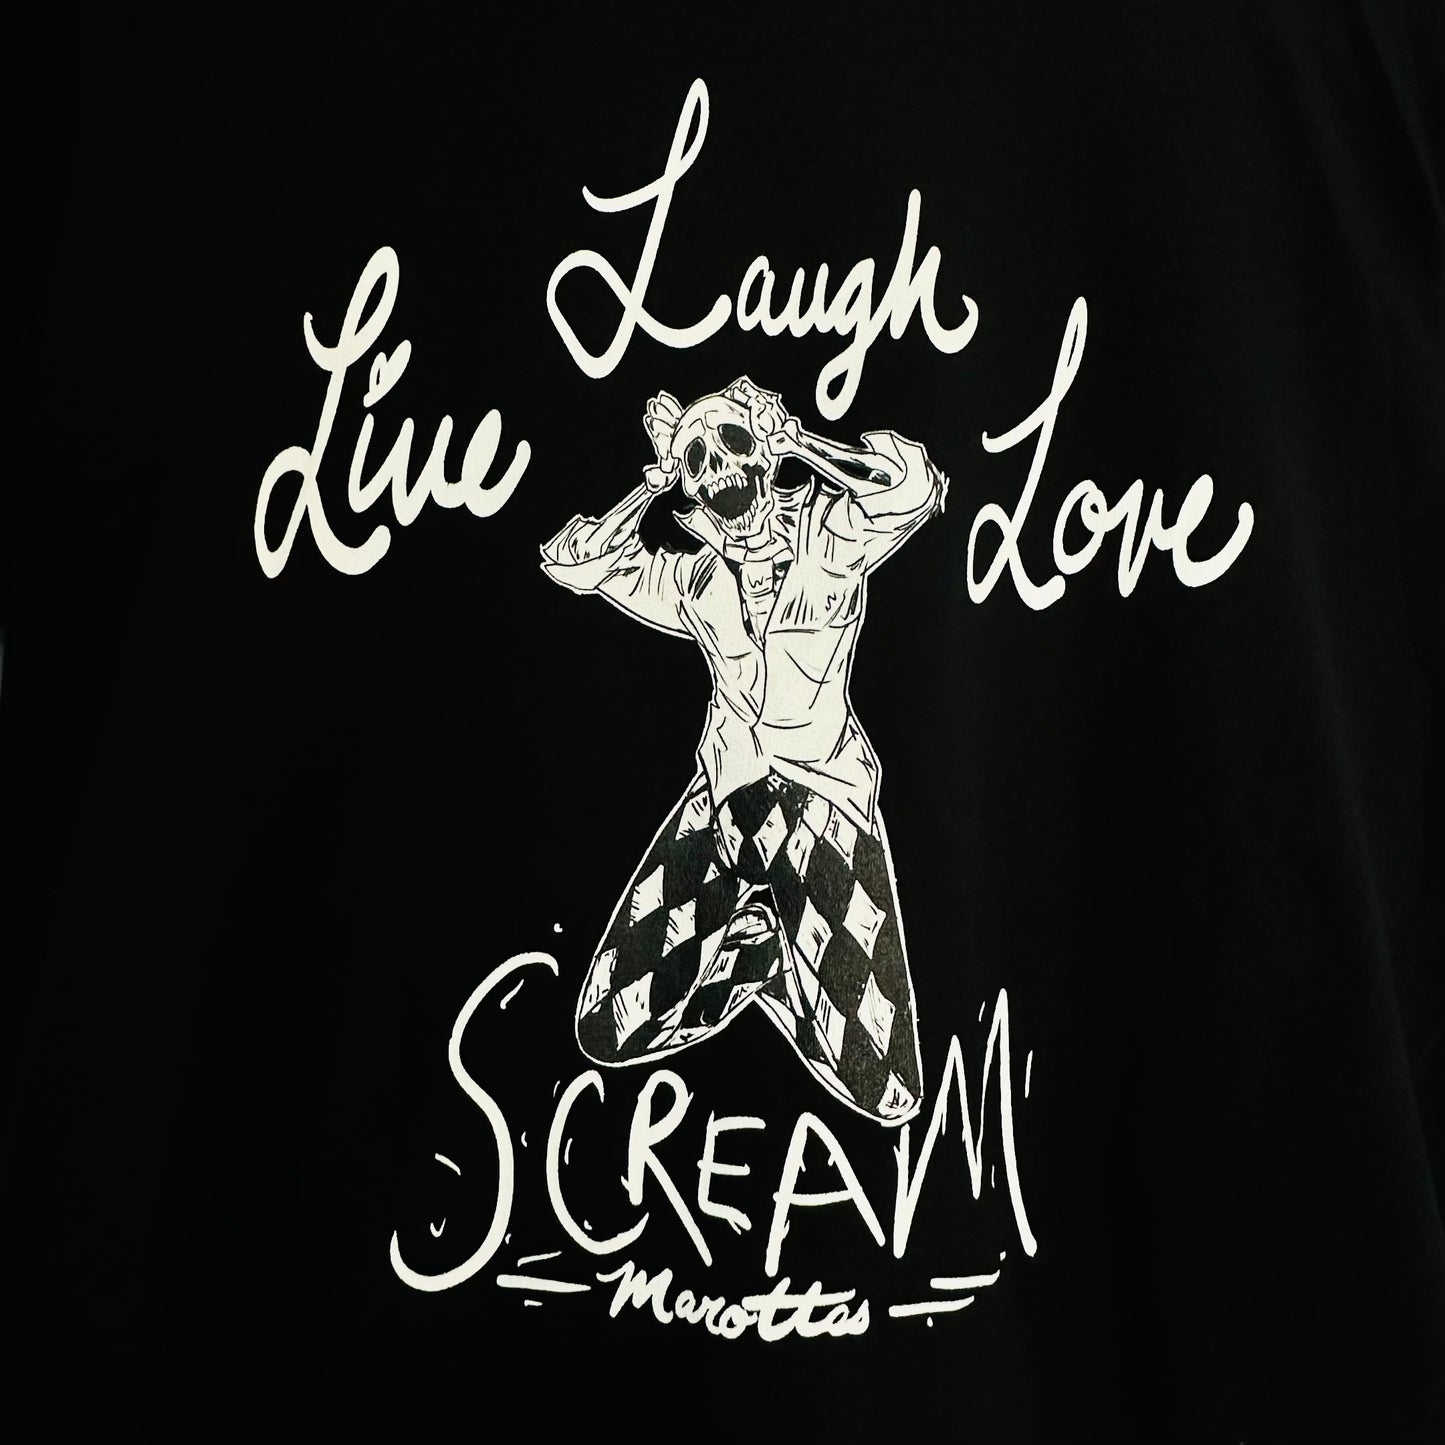 LIVE LAUGH LOVE SCREAM T-shirt